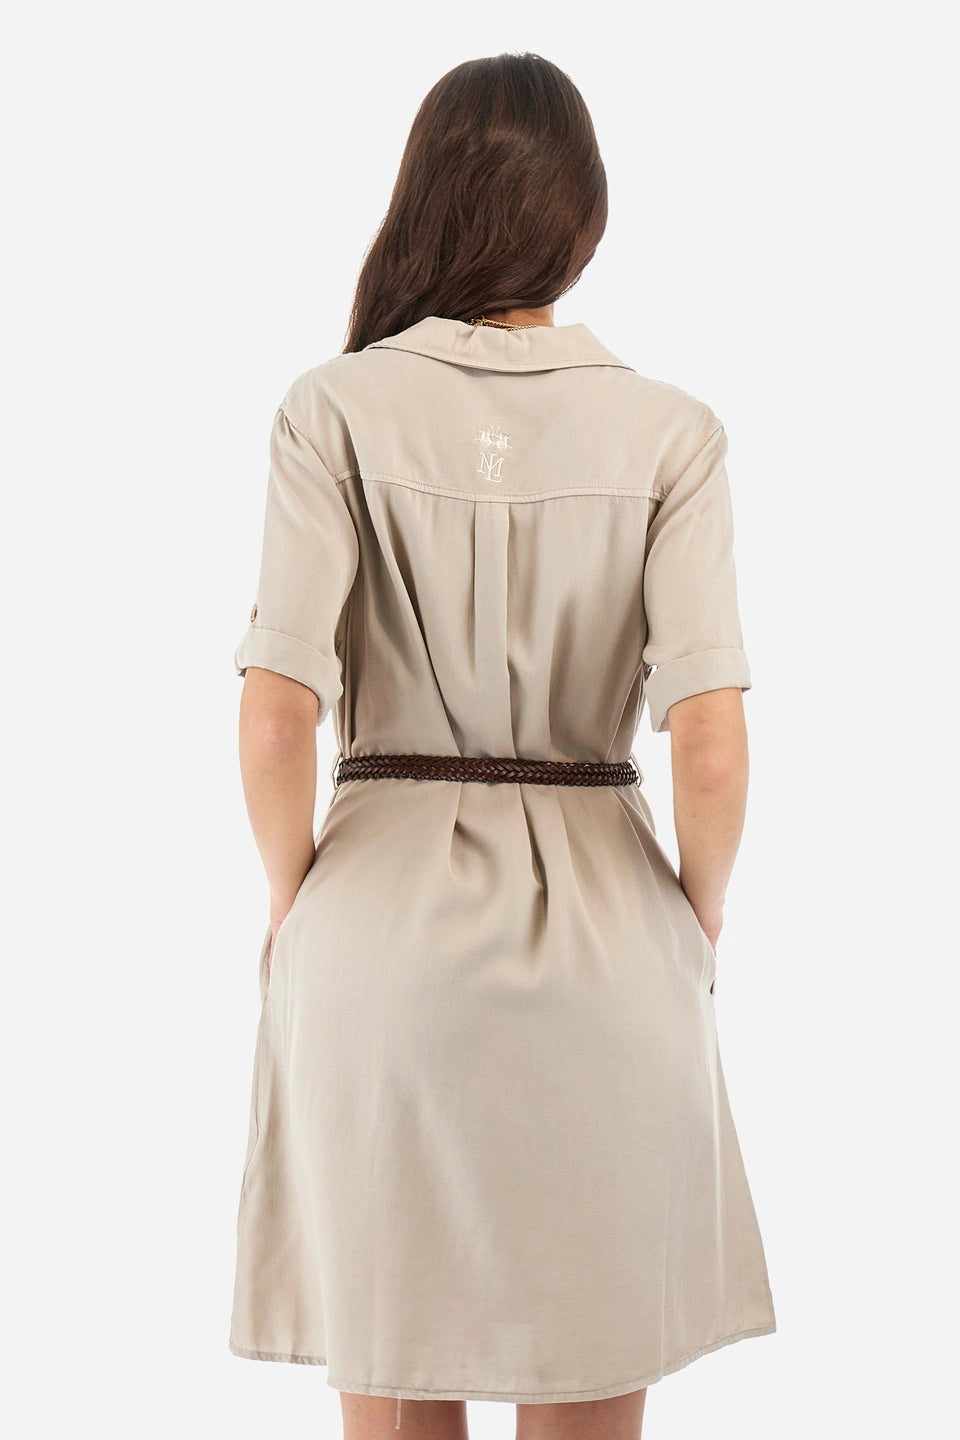 La Martina short sleeve dress- Yeruscha/ Haljina YWD002-TW523